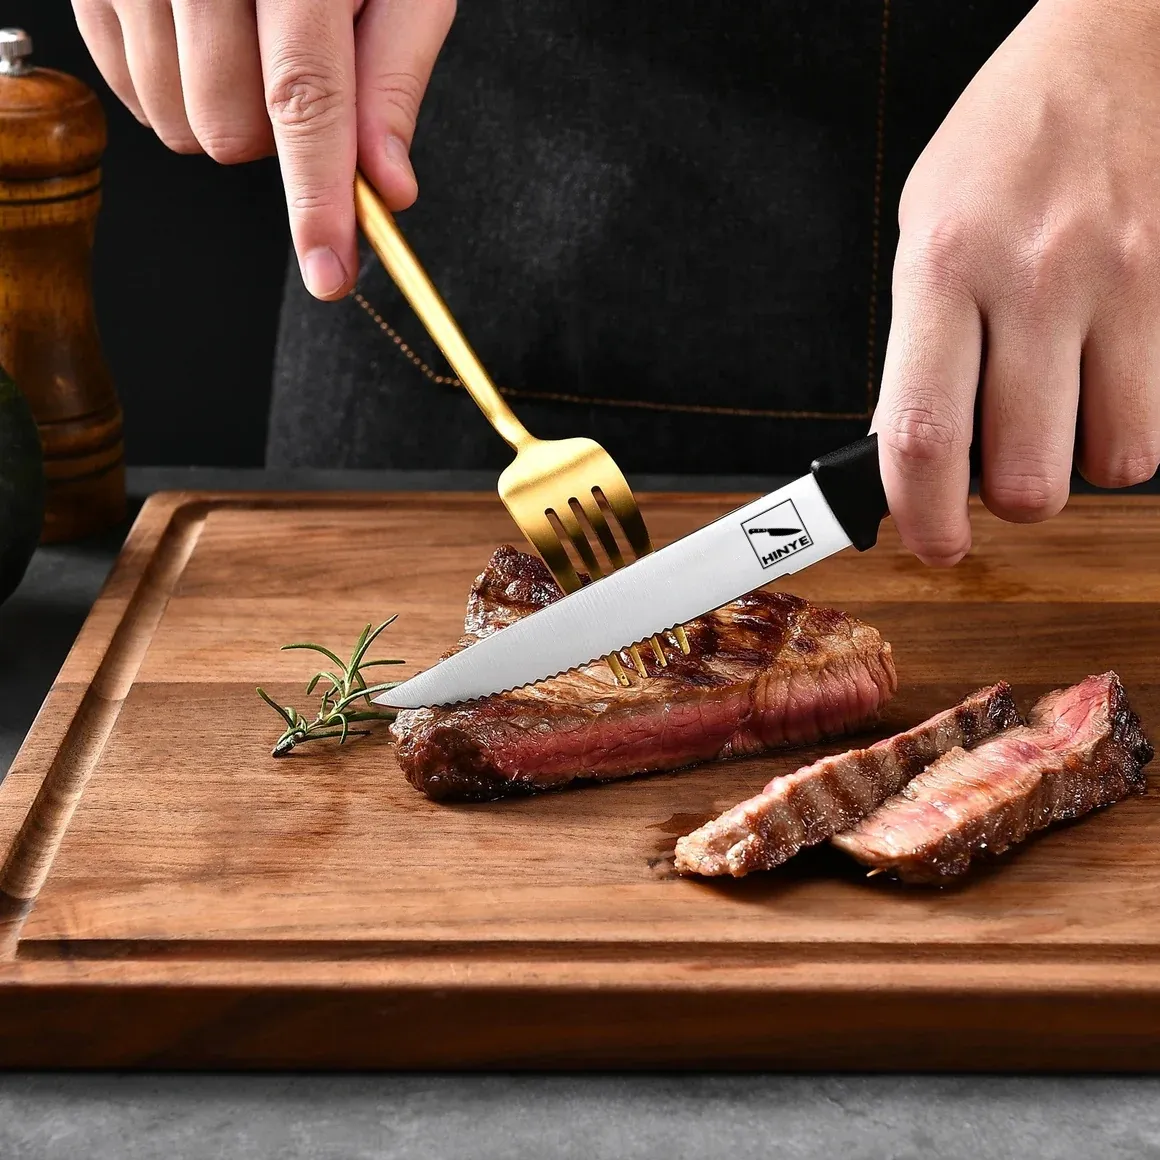 Hinye-Acciaio 6 Piece Steak Knives Set